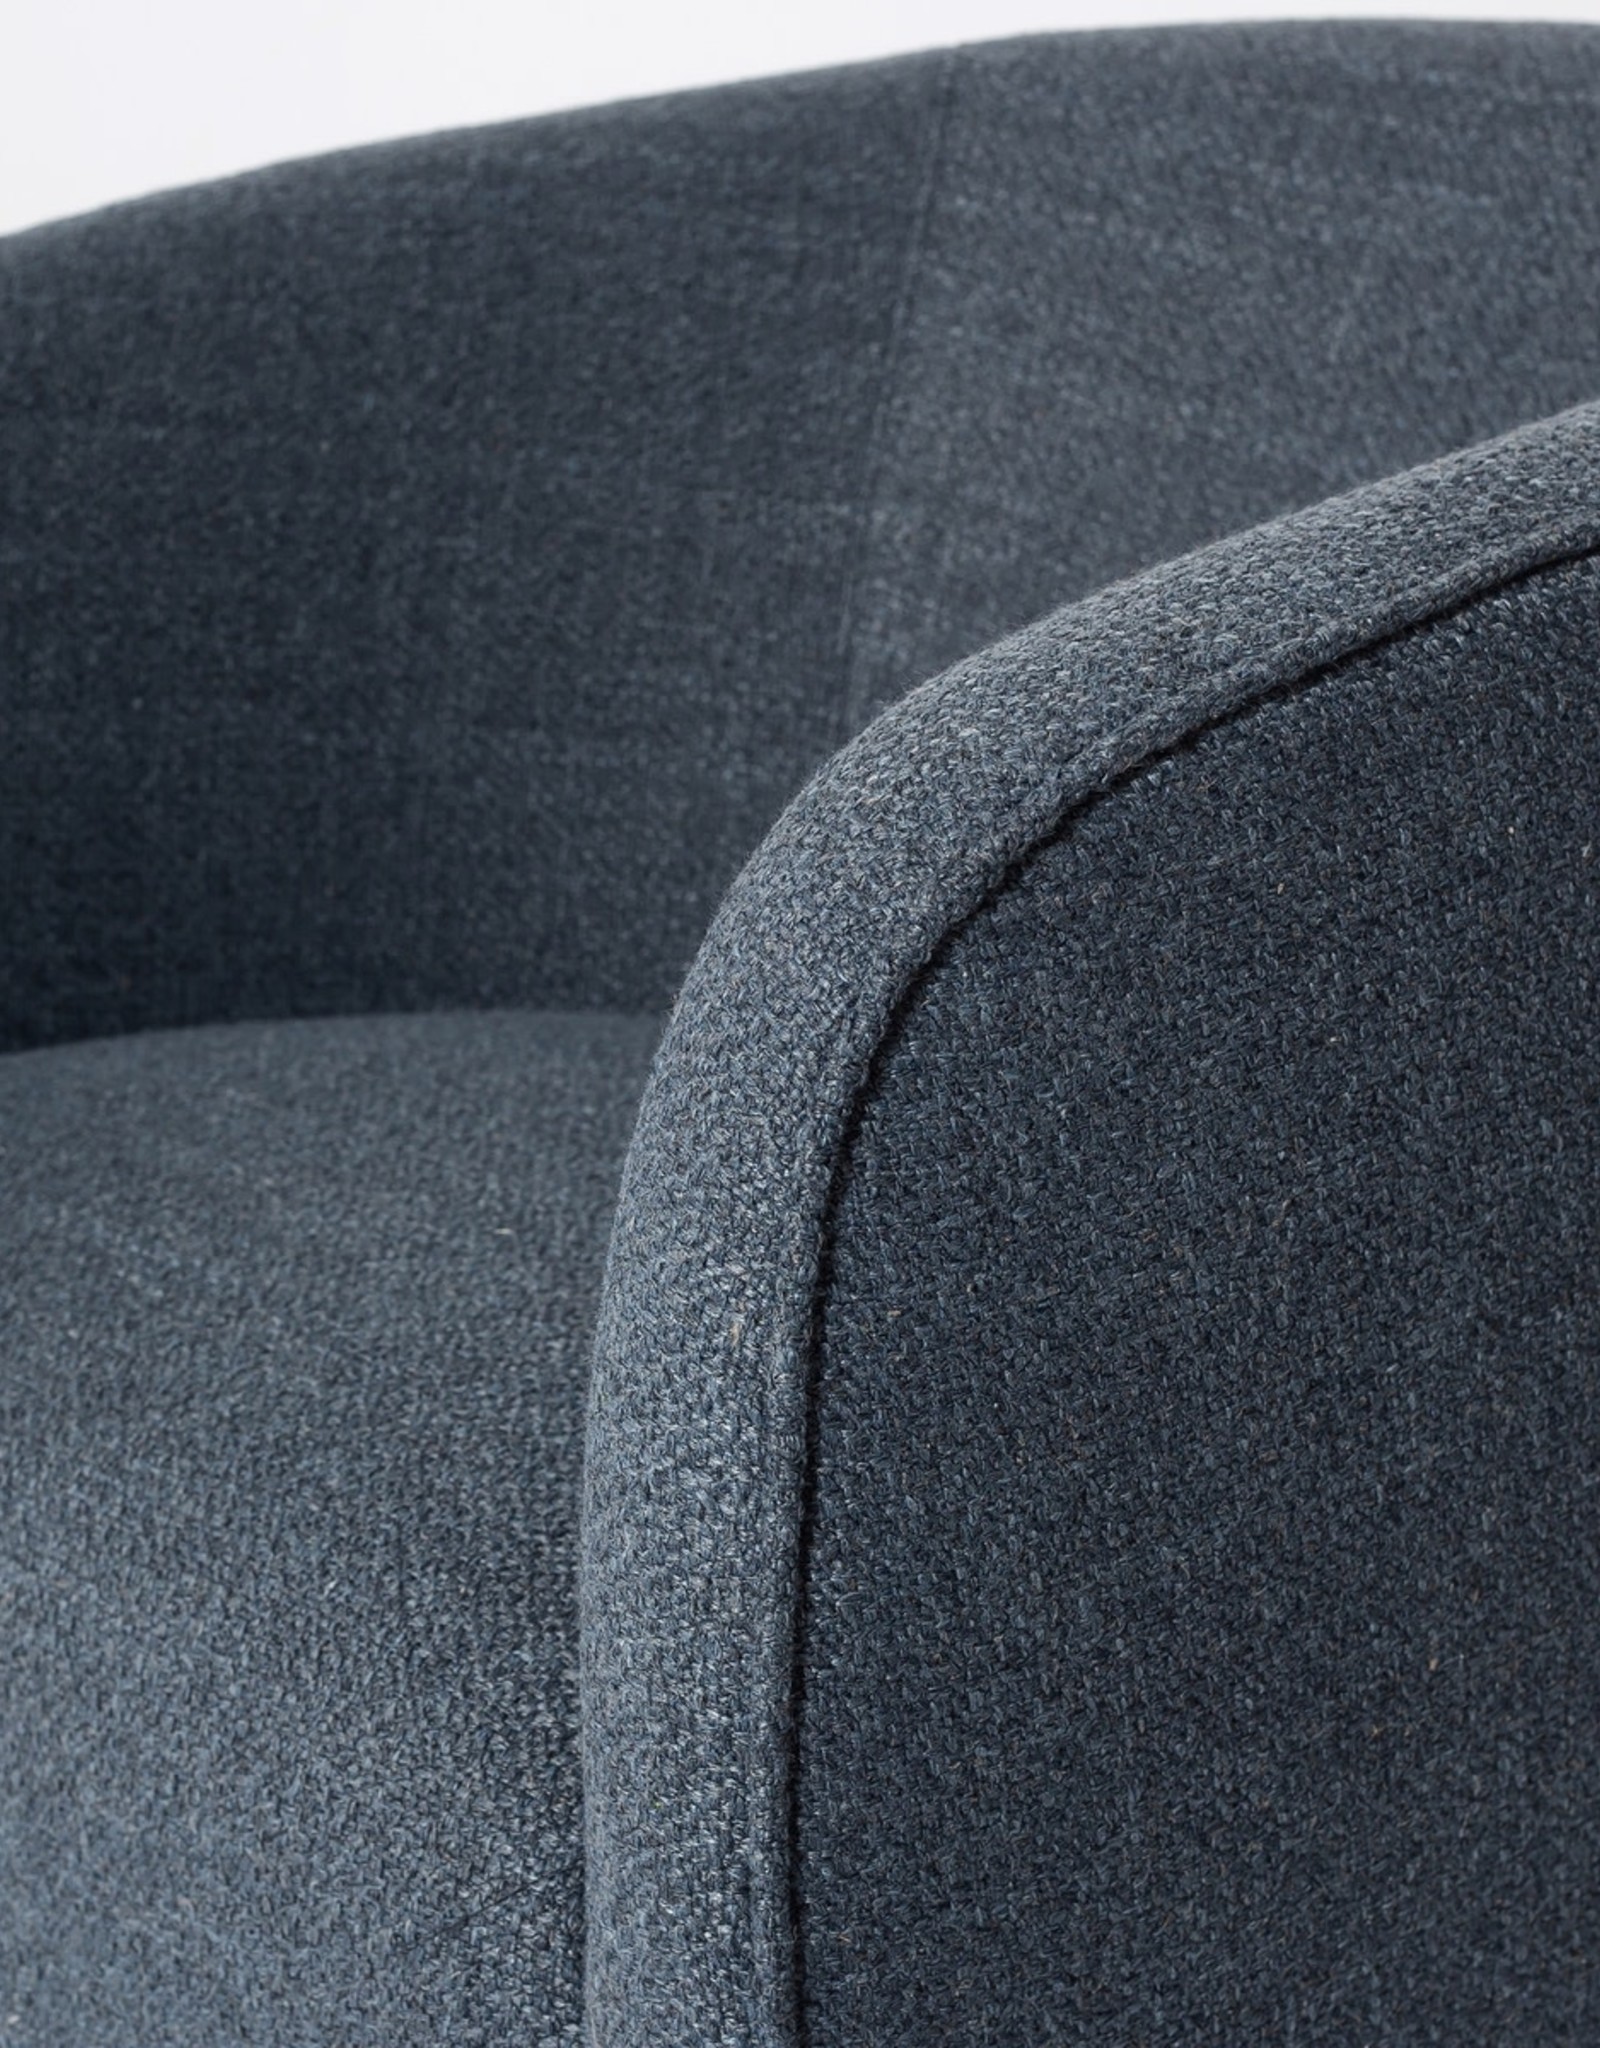 Evita Swivel Chair - Marine Weave